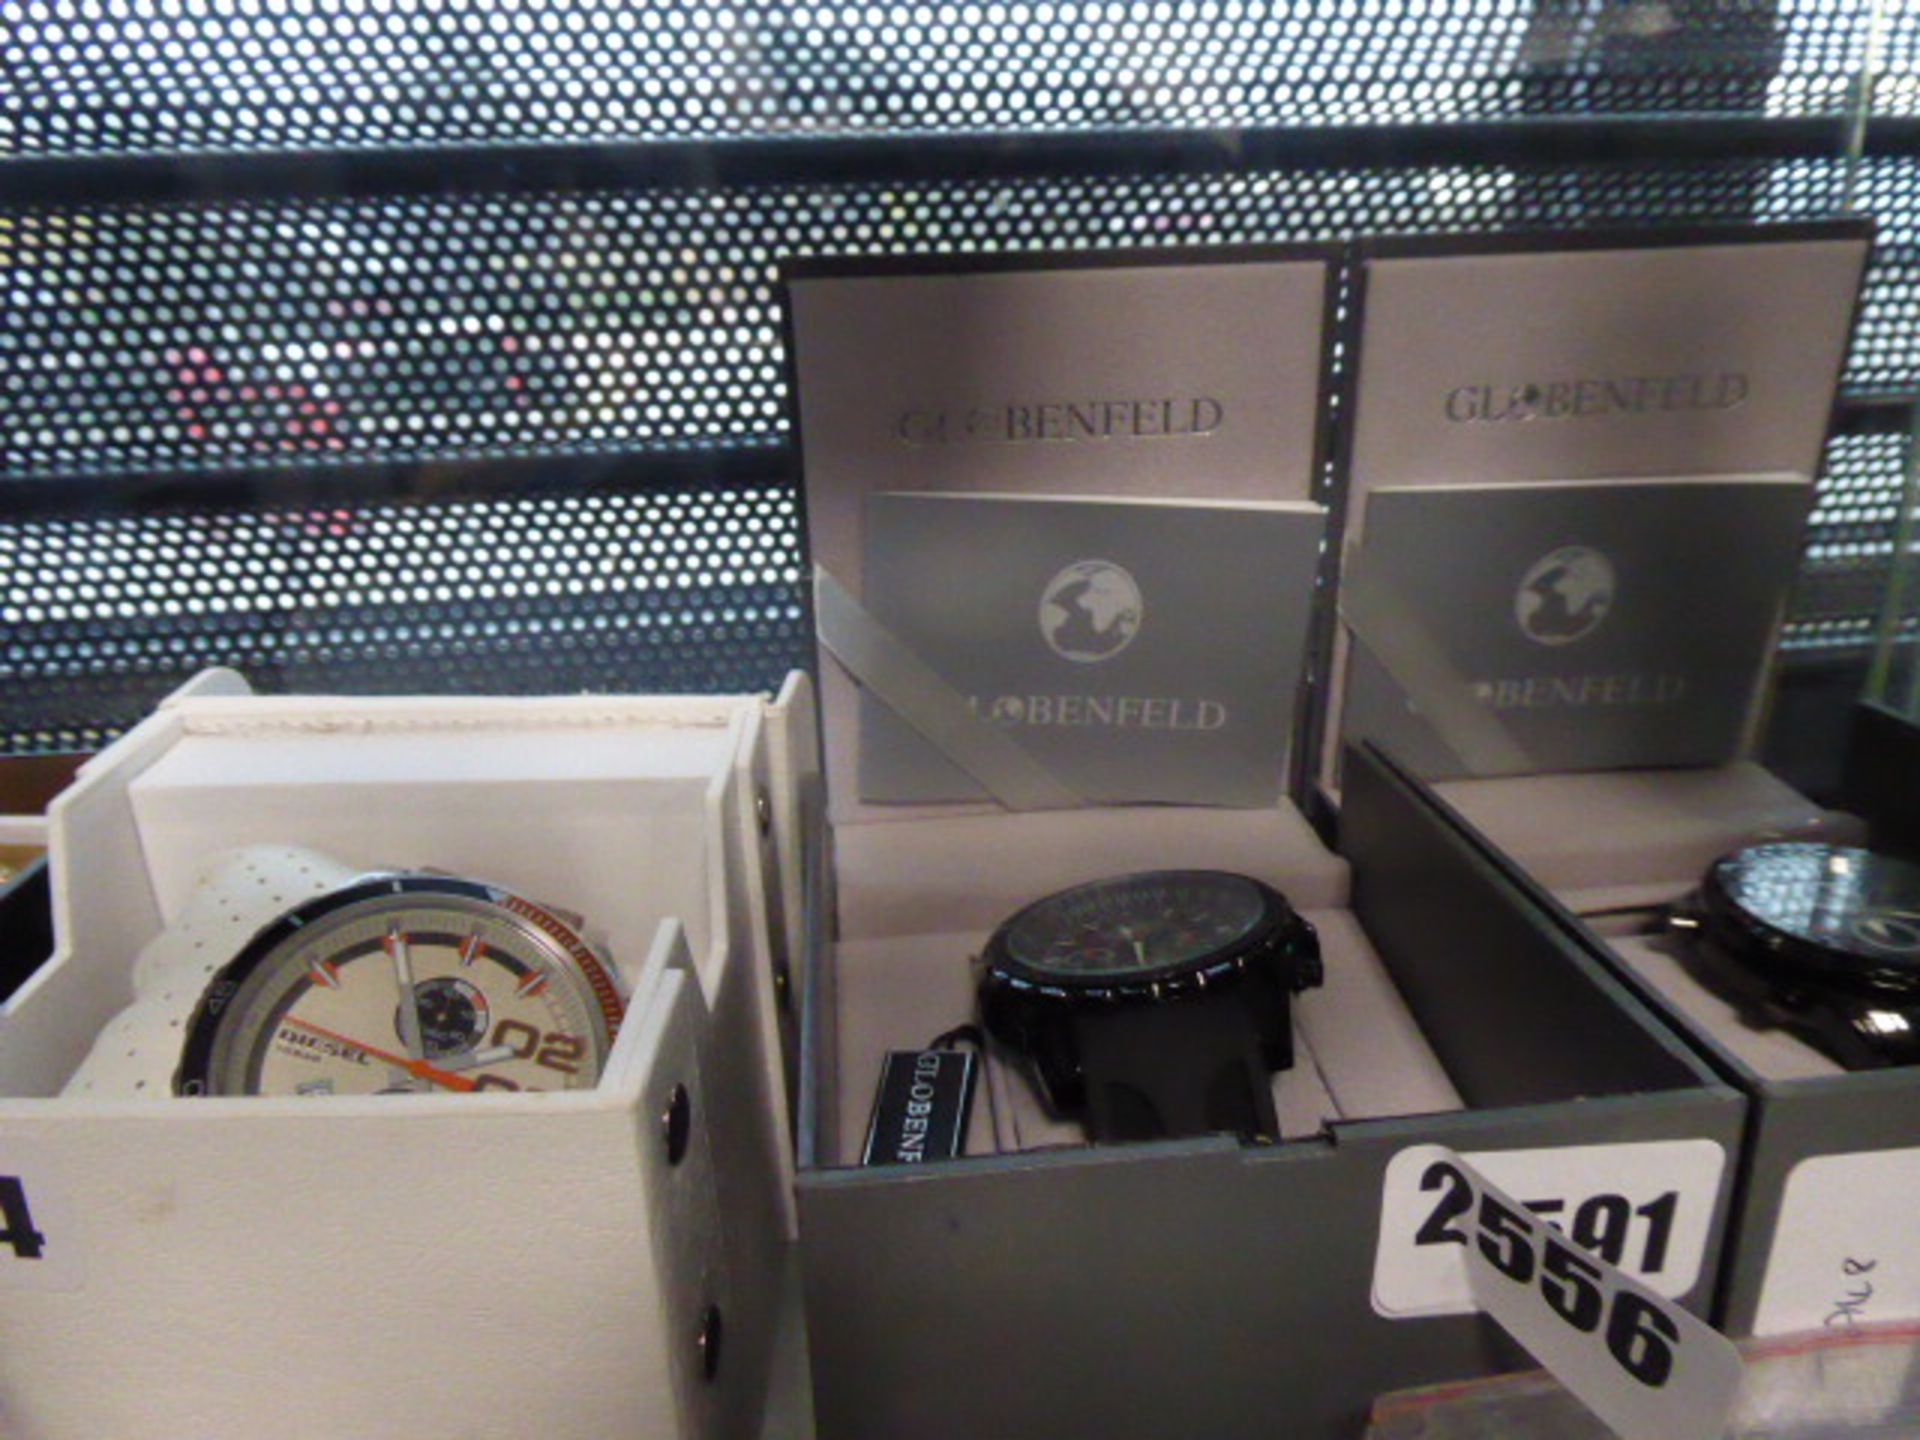 2591 - Glovenfeld wristwatch in box